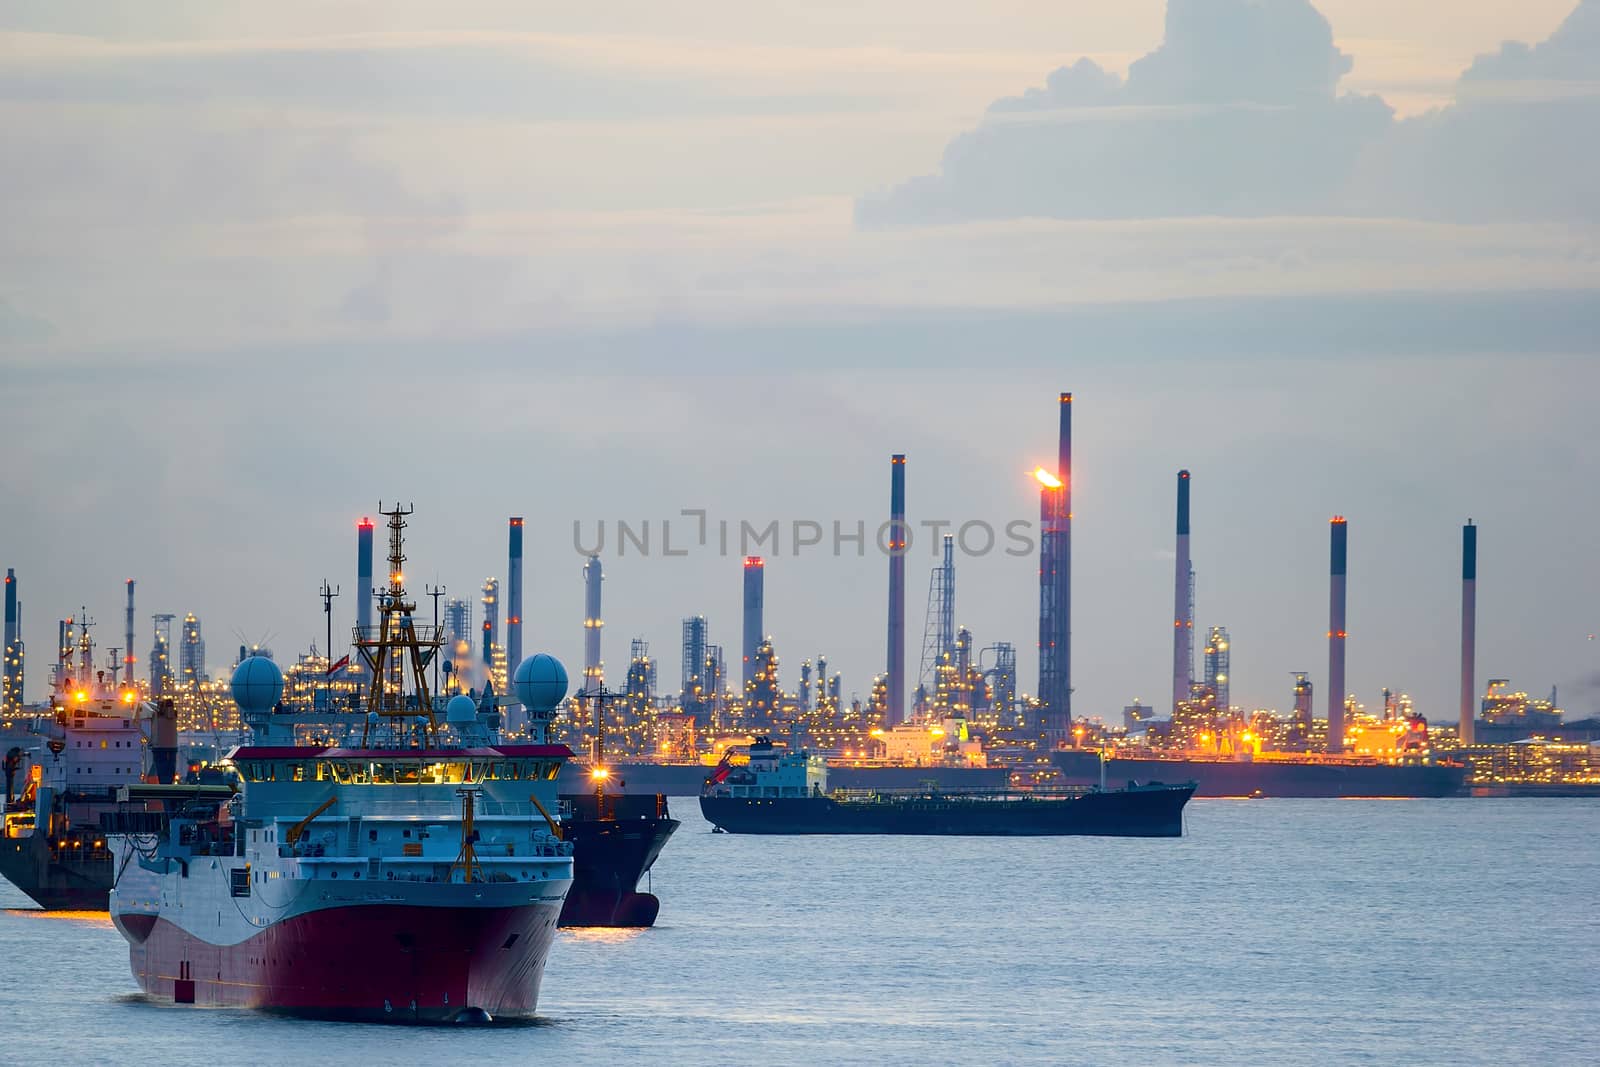 Survey and Cargo Ships off the Coast of Singapore Petroleum Refi by Davidgn